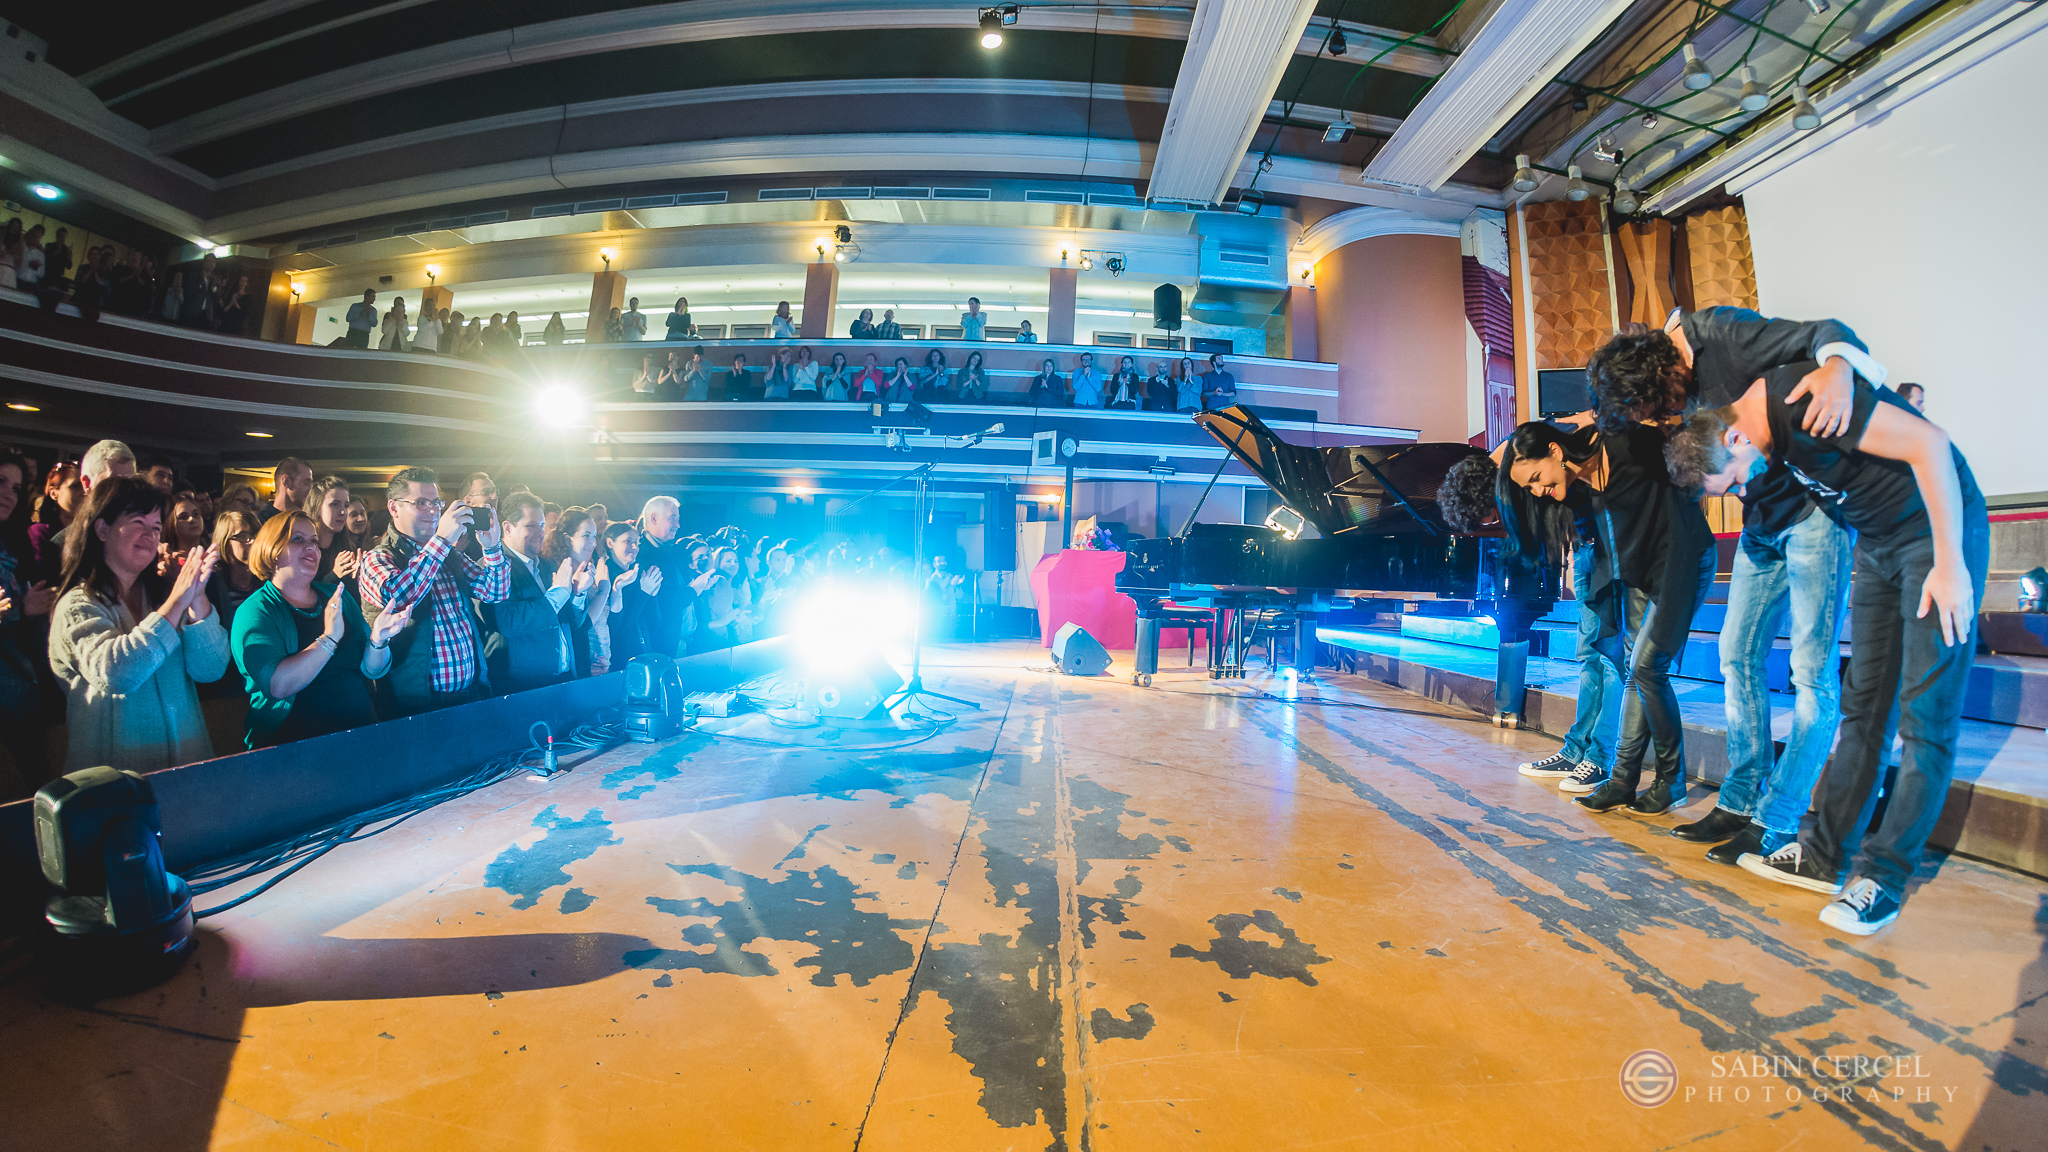 Pianist Teo Milea performing at Timisoara Philharmonic Hall | New Album Release 'Open Minds' (2016)